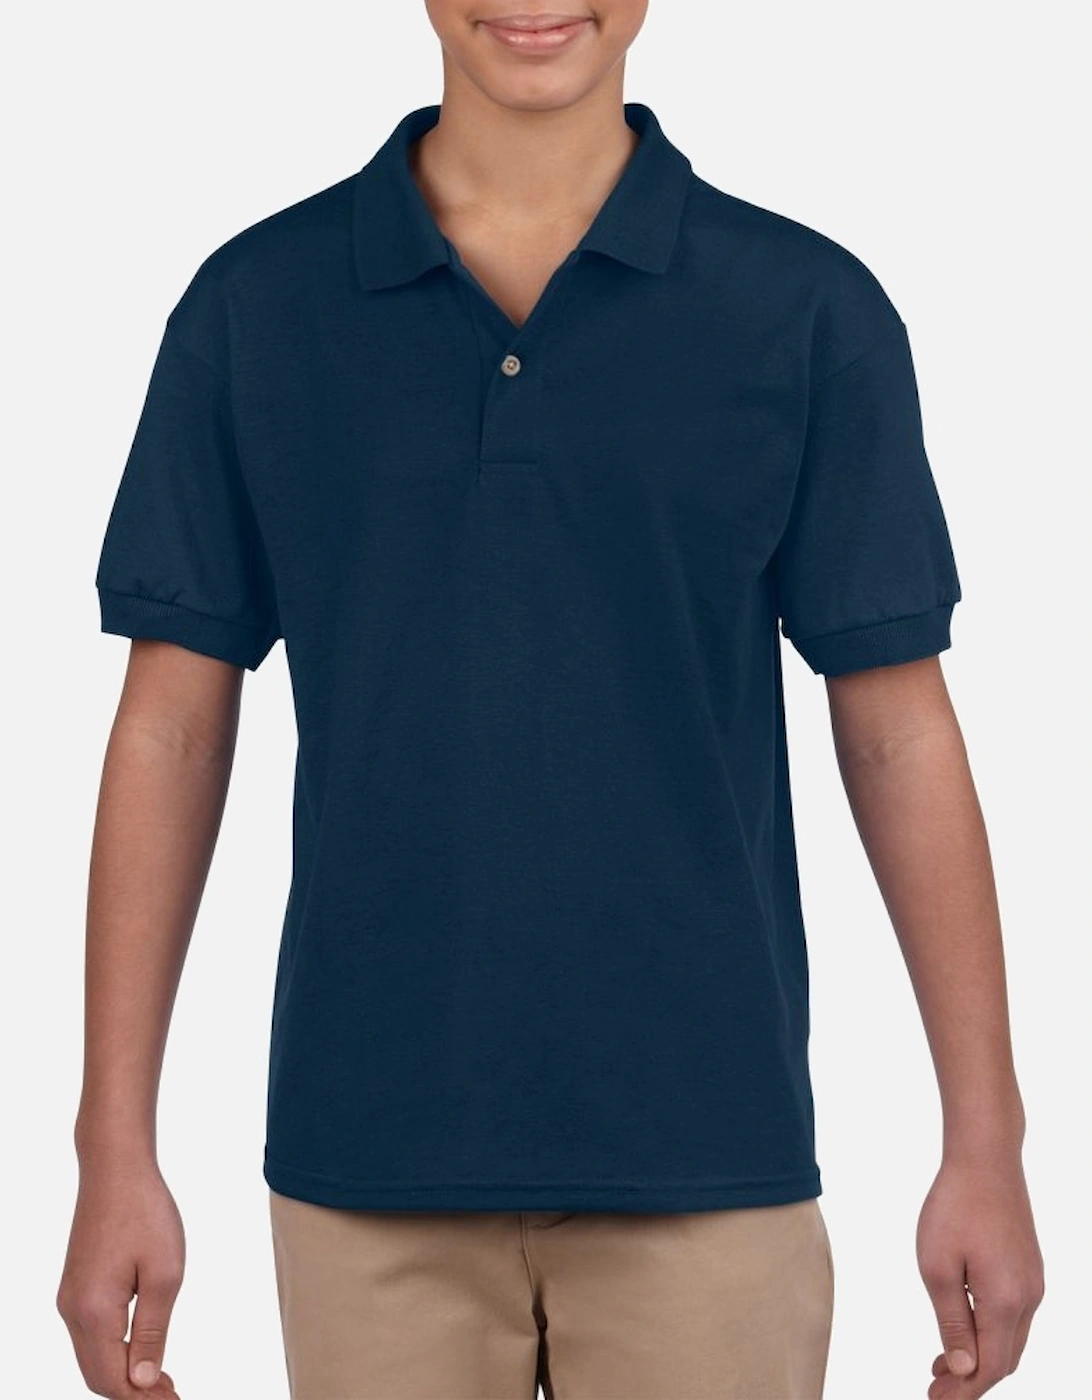 Childrens/Kids Plain Jersey Polo Shirt